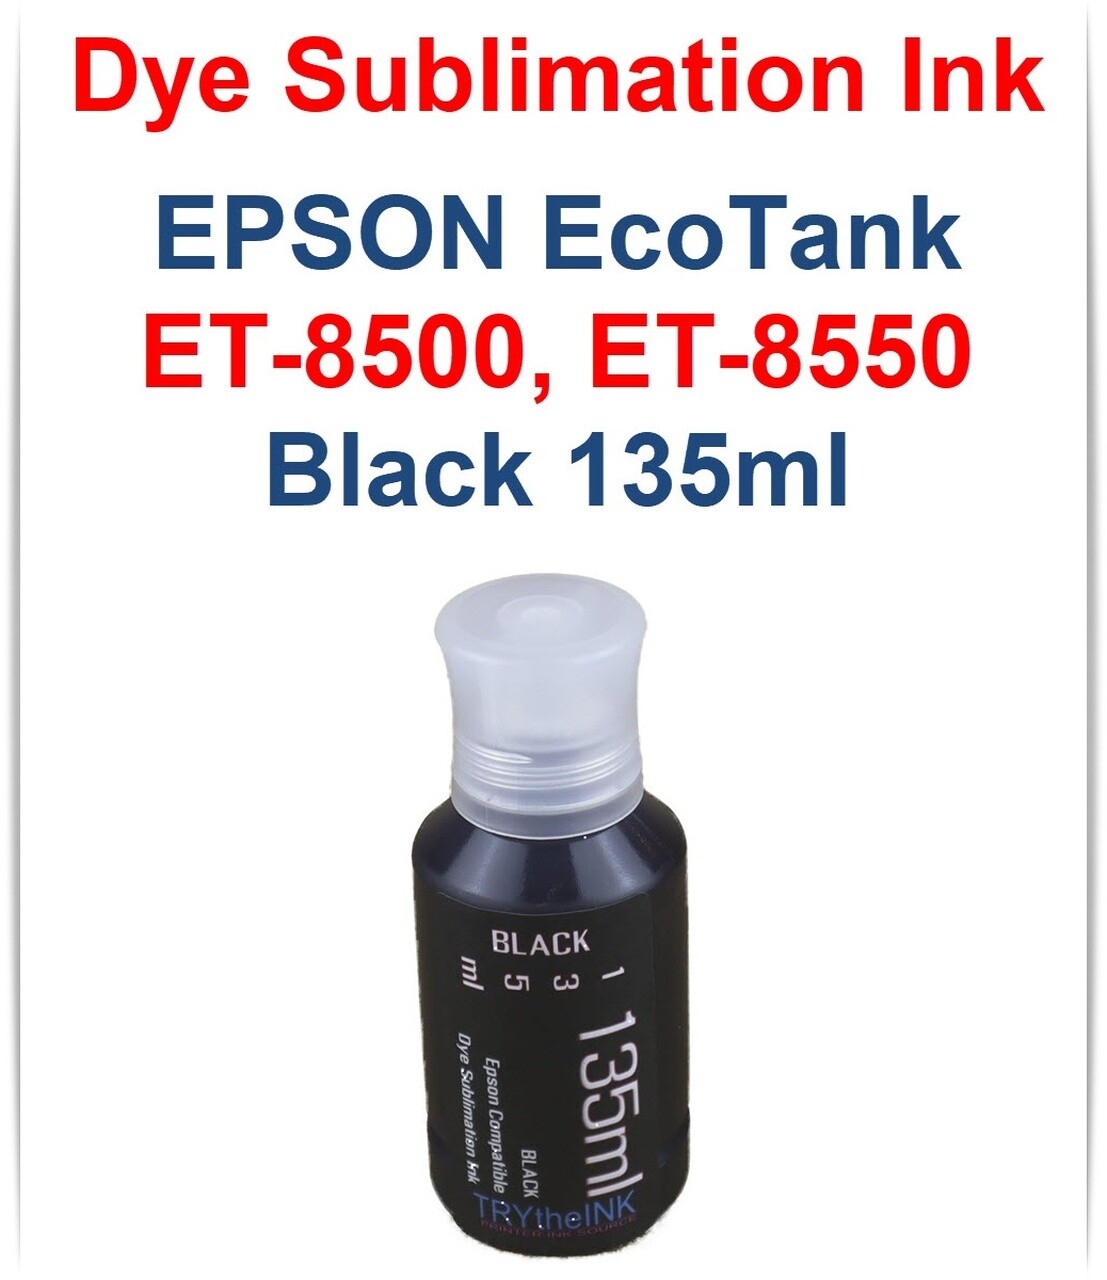 Black Dye Sublimation Ink 135ml bottle for EPSON EcoTank ET-8500 ET-8550 printers